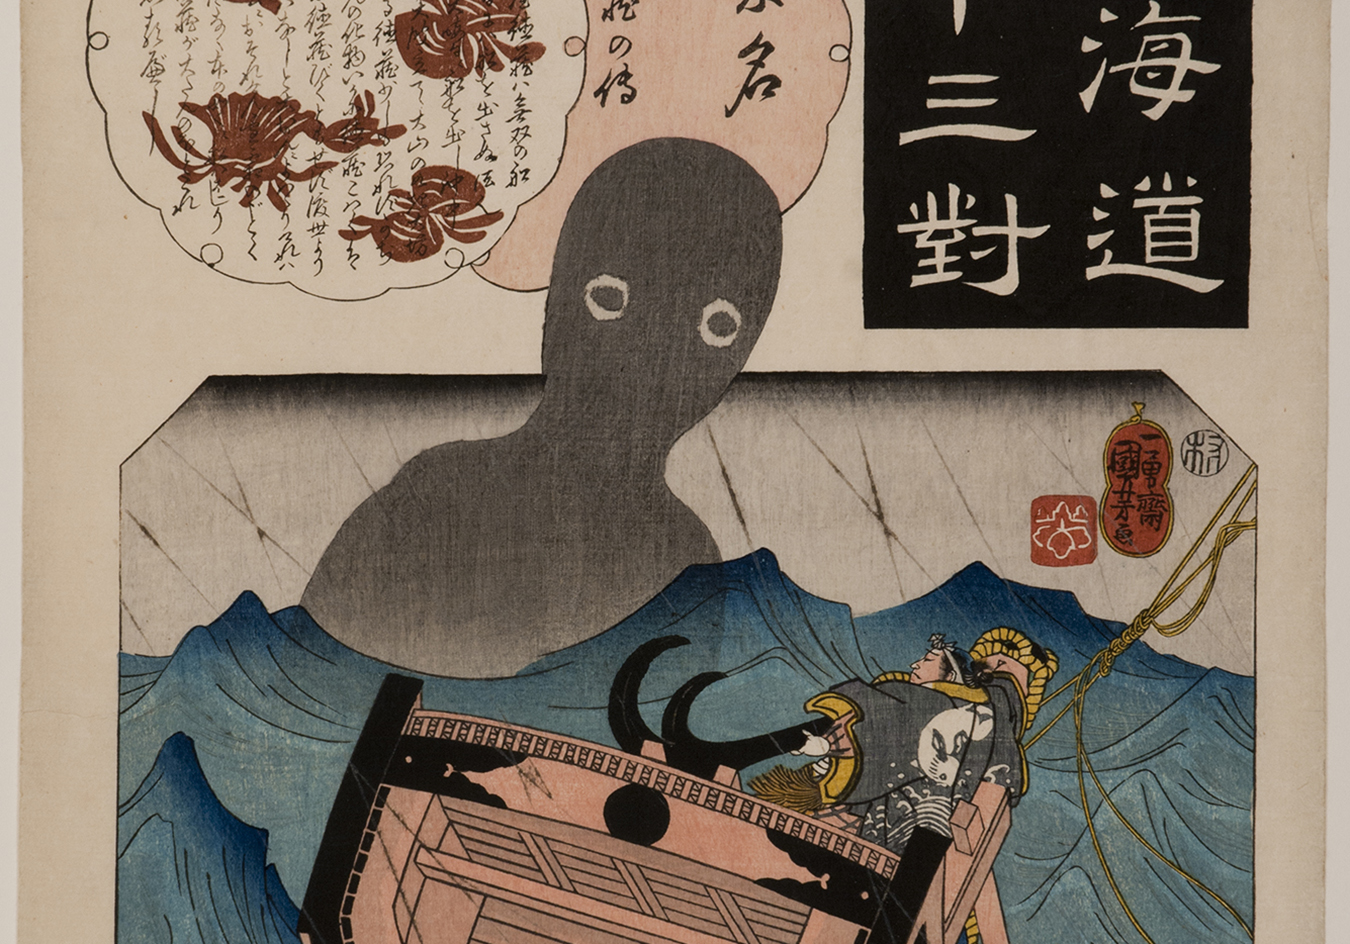 Utagawa Kuniyoshi (Japanese, 1798-1861), Kuwana: Legend of the Sailor Tokuzo, c. 1844-45, woodblock print, 14-5/8 x 10-1/4 inches, oban format. Gift of Dr. William E. Harkins, 75.84